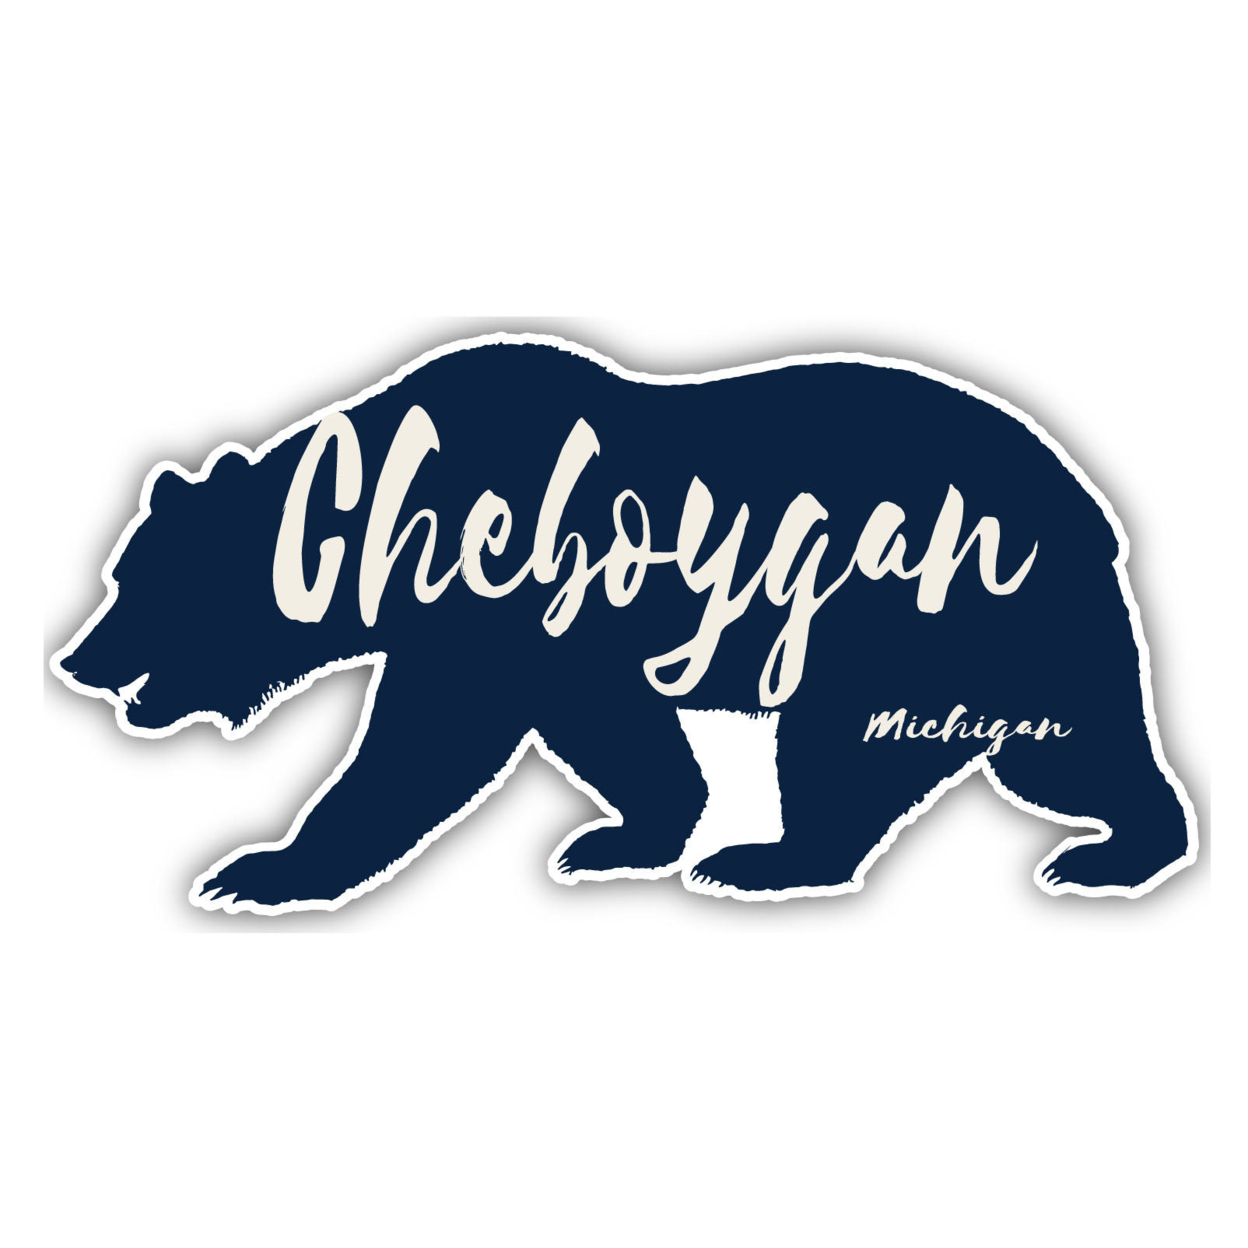 Cheboygan Michigan Souvenir Decorative Stickers (Choose Theme And Size) - Single Unit, 12-Inch, Bear